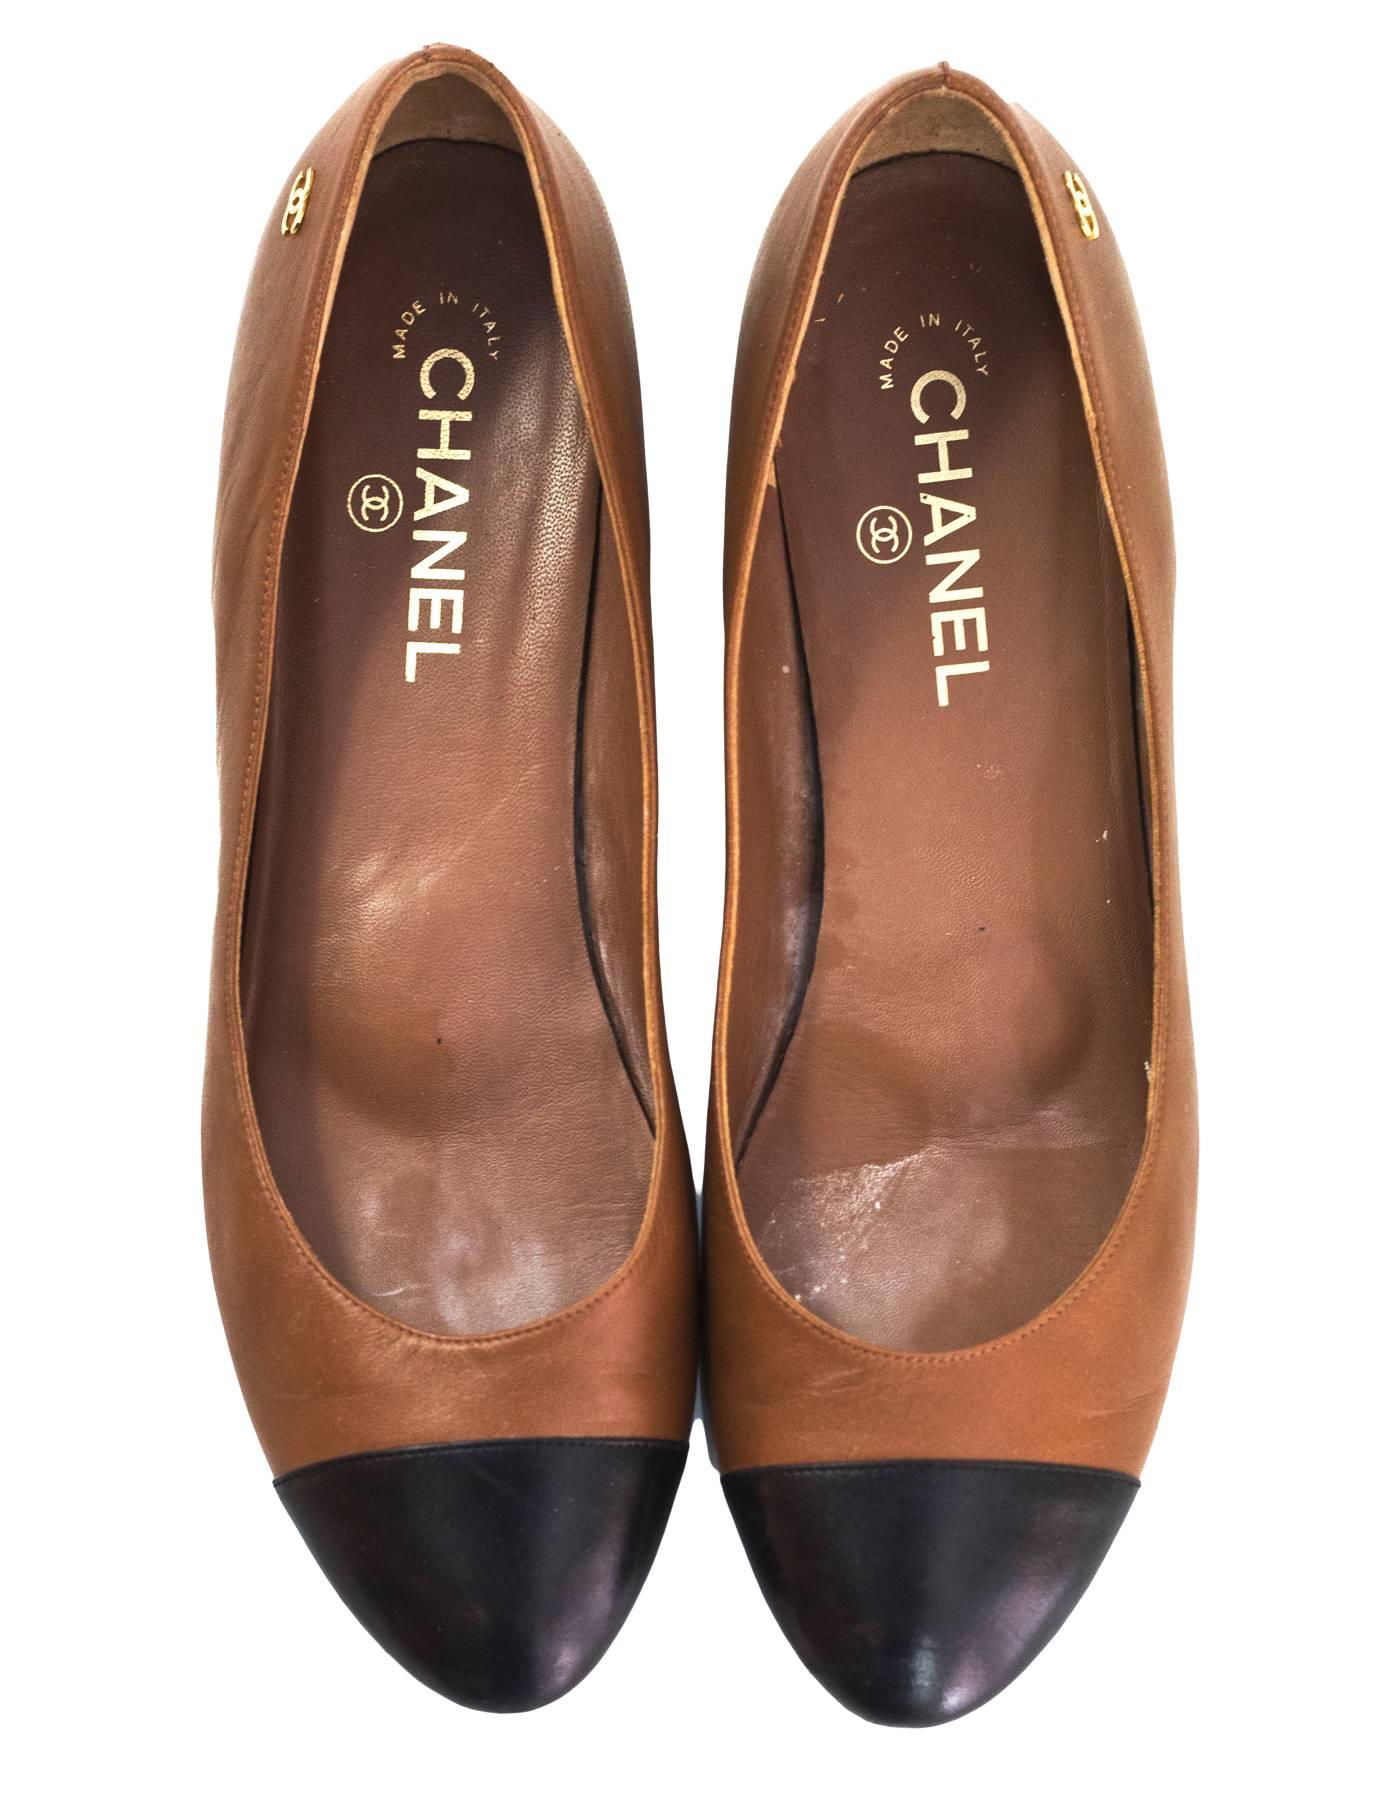 Women's Chanel Brown and Black Cap Toe Flats Sz 41